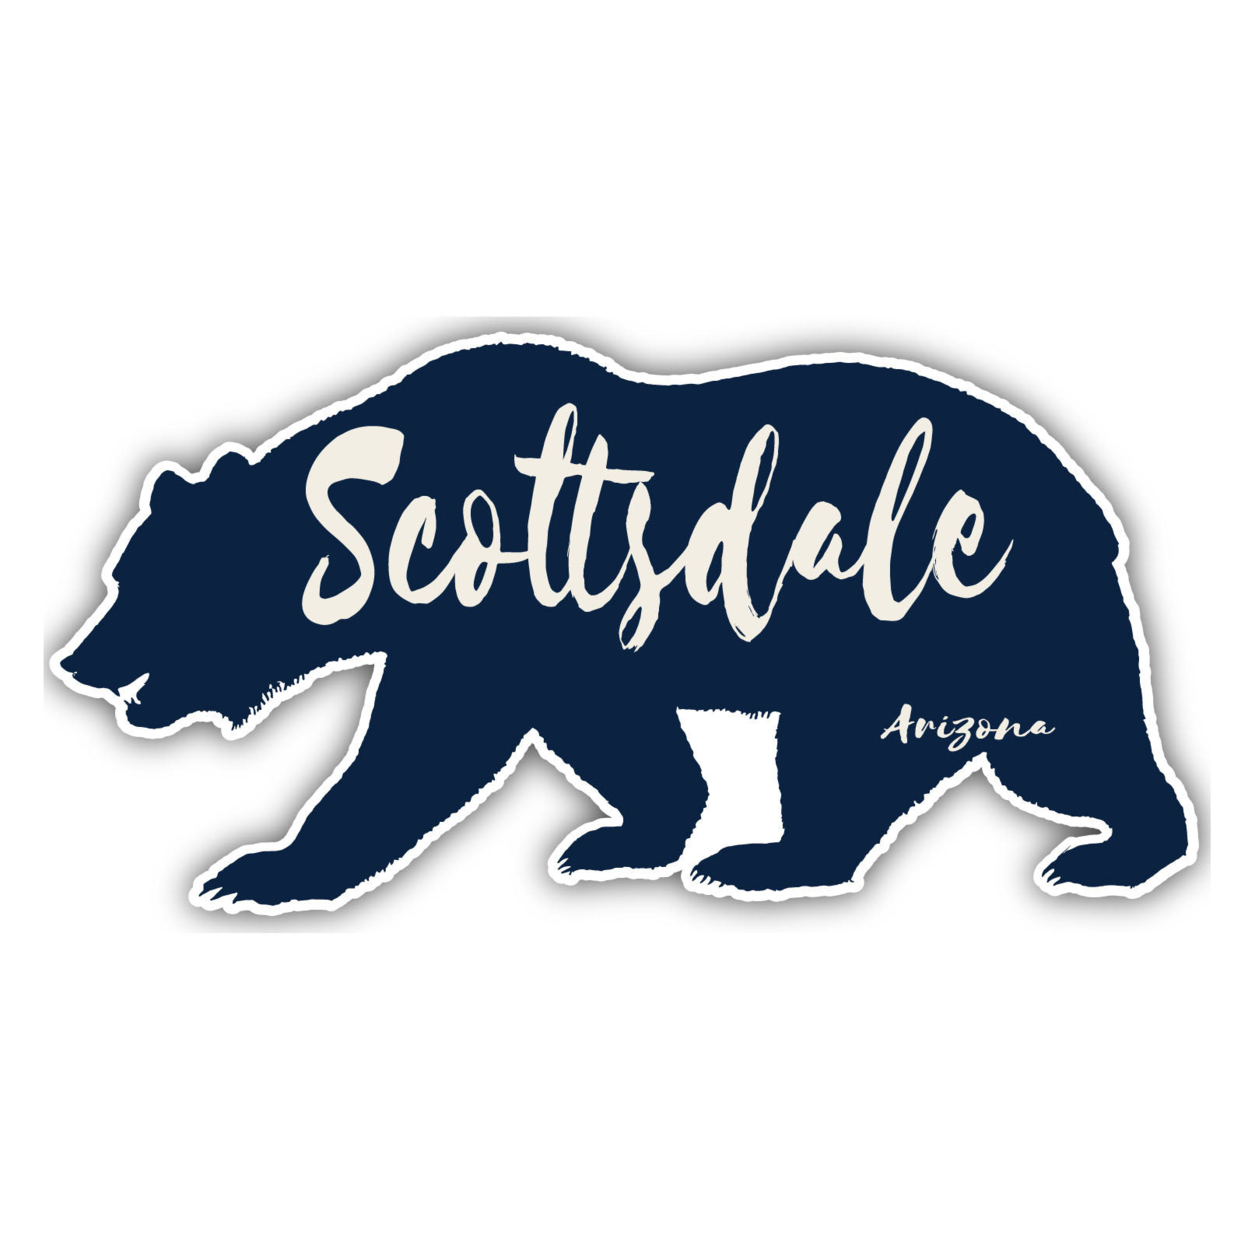 Scottsdale Arizona Souvenir Decorative Stickers (Choose Theme And Size) - Single Unit, 2-Inch, Bear